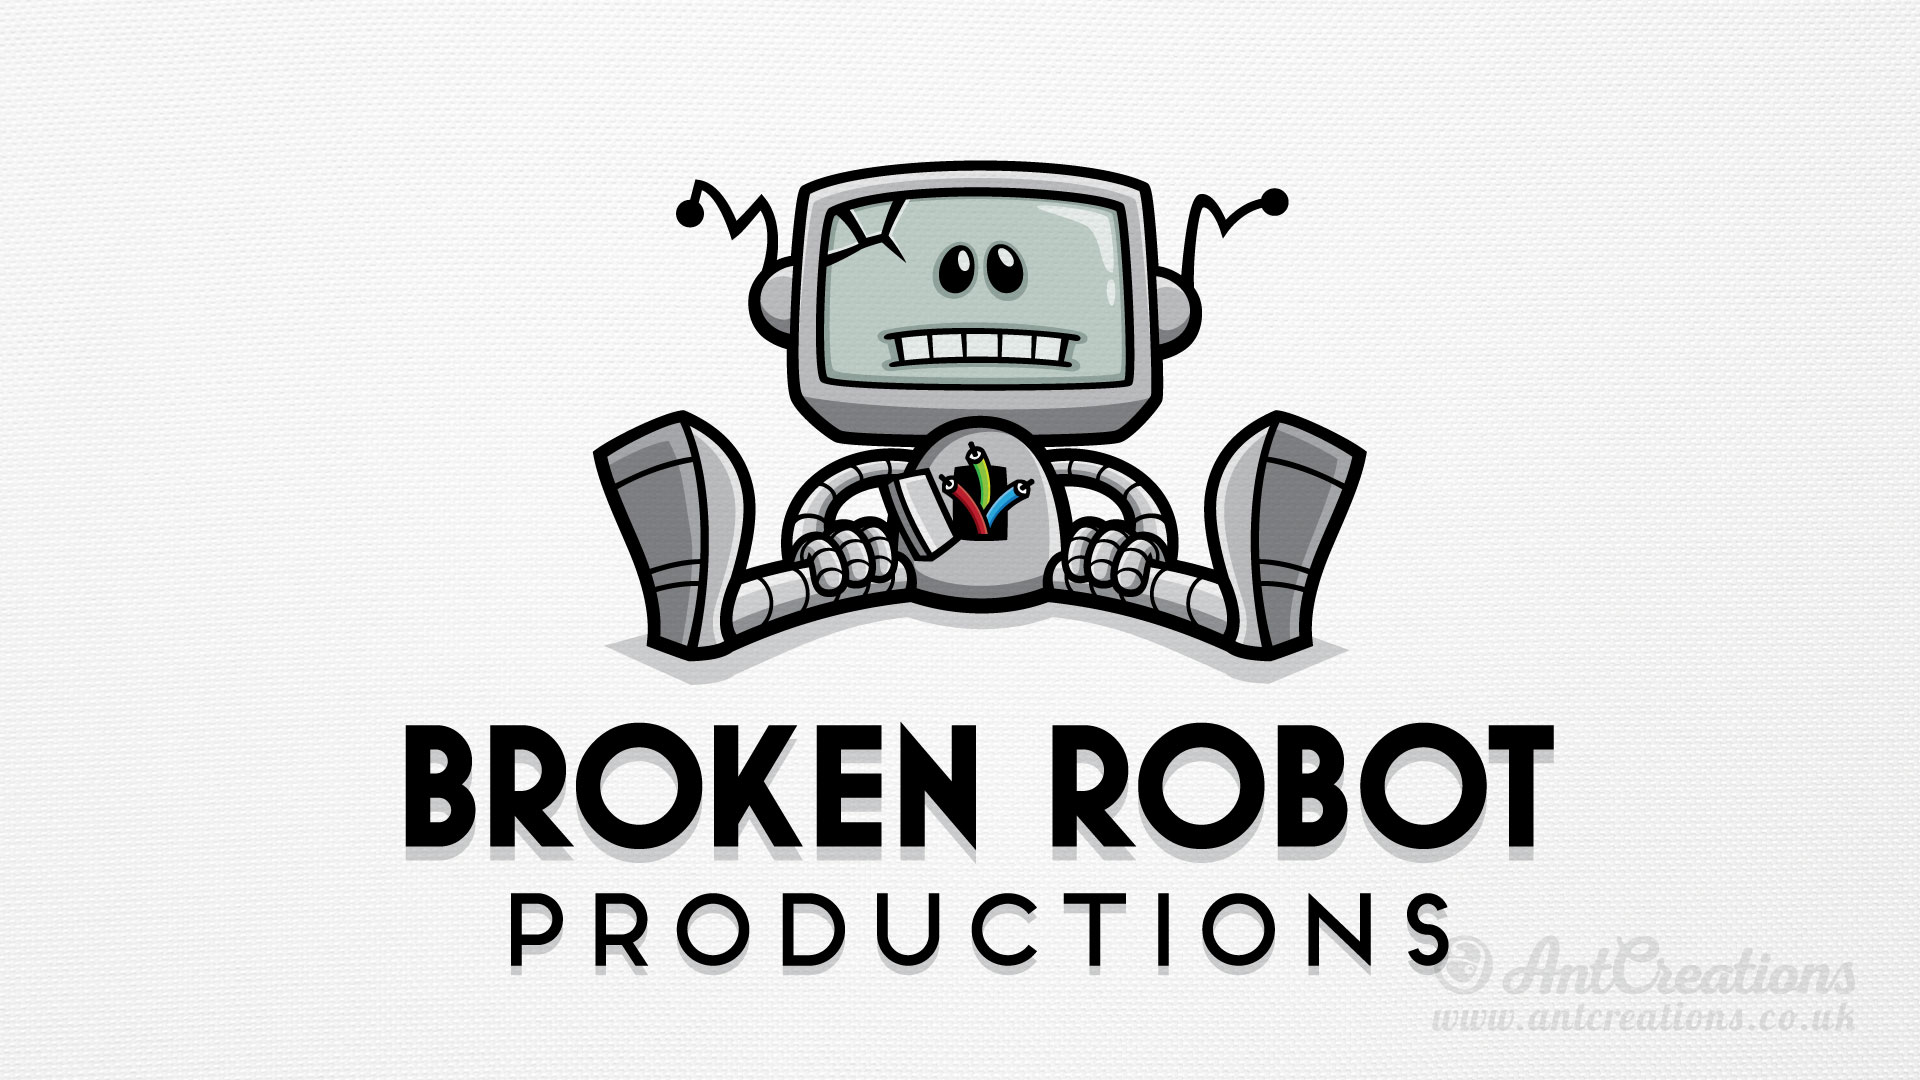 AntCreations-BrokenRobotLogo.jpg